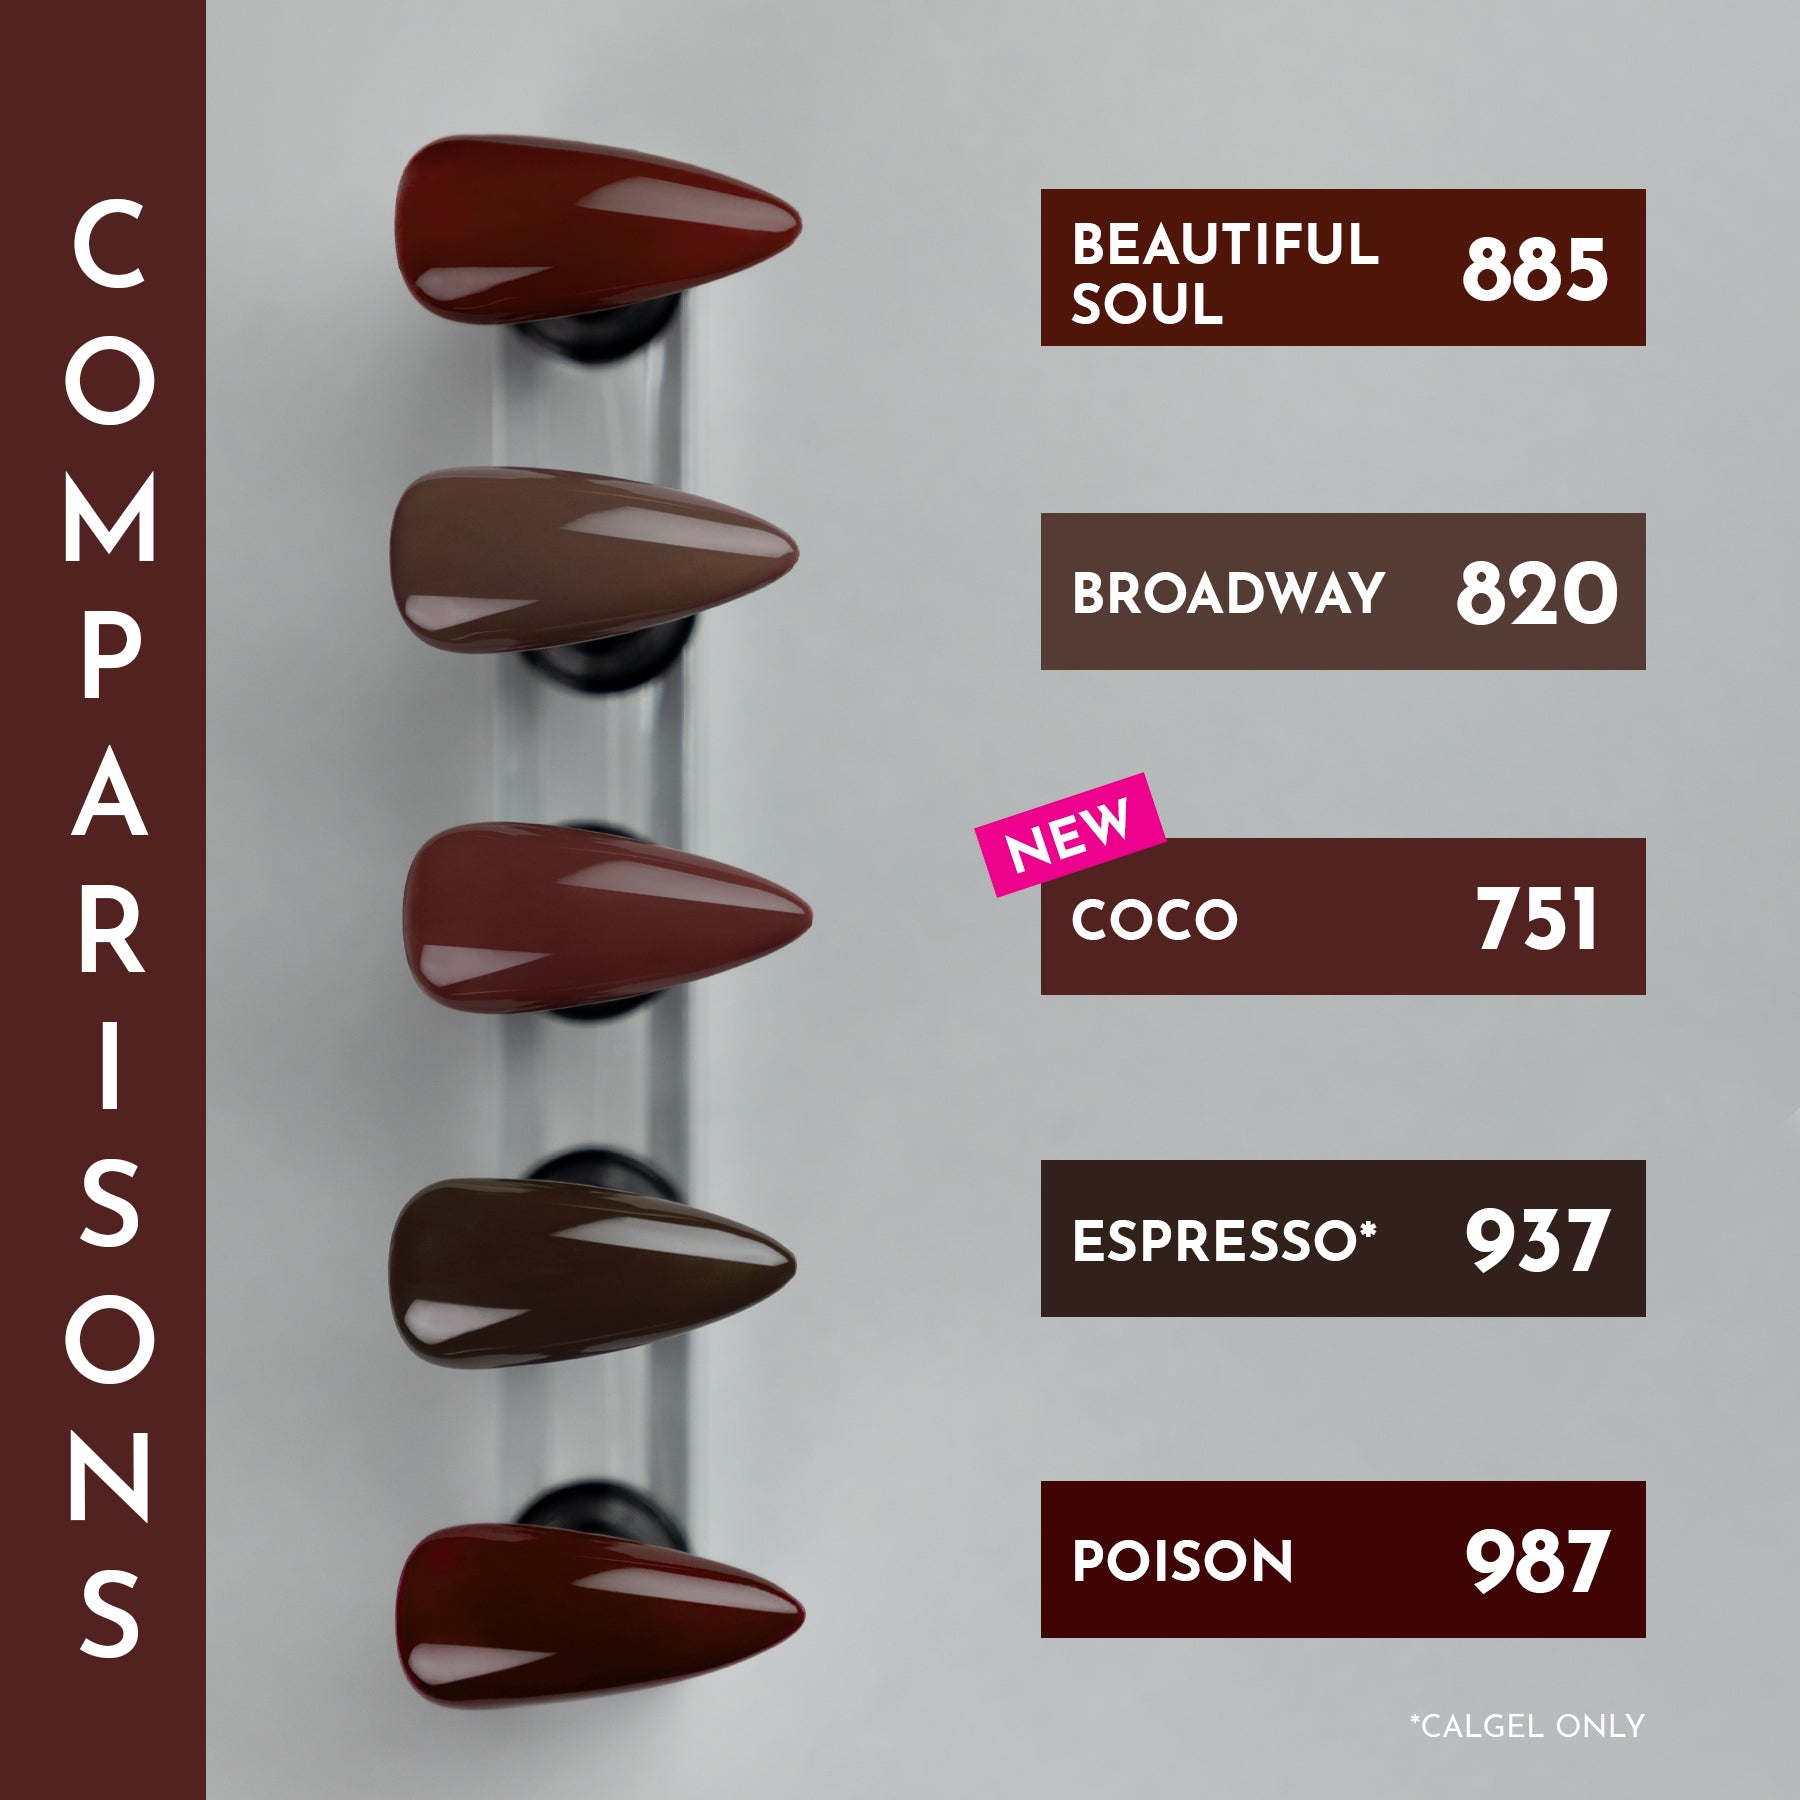 Calgel Coco 751 Comparisons Pro Colour